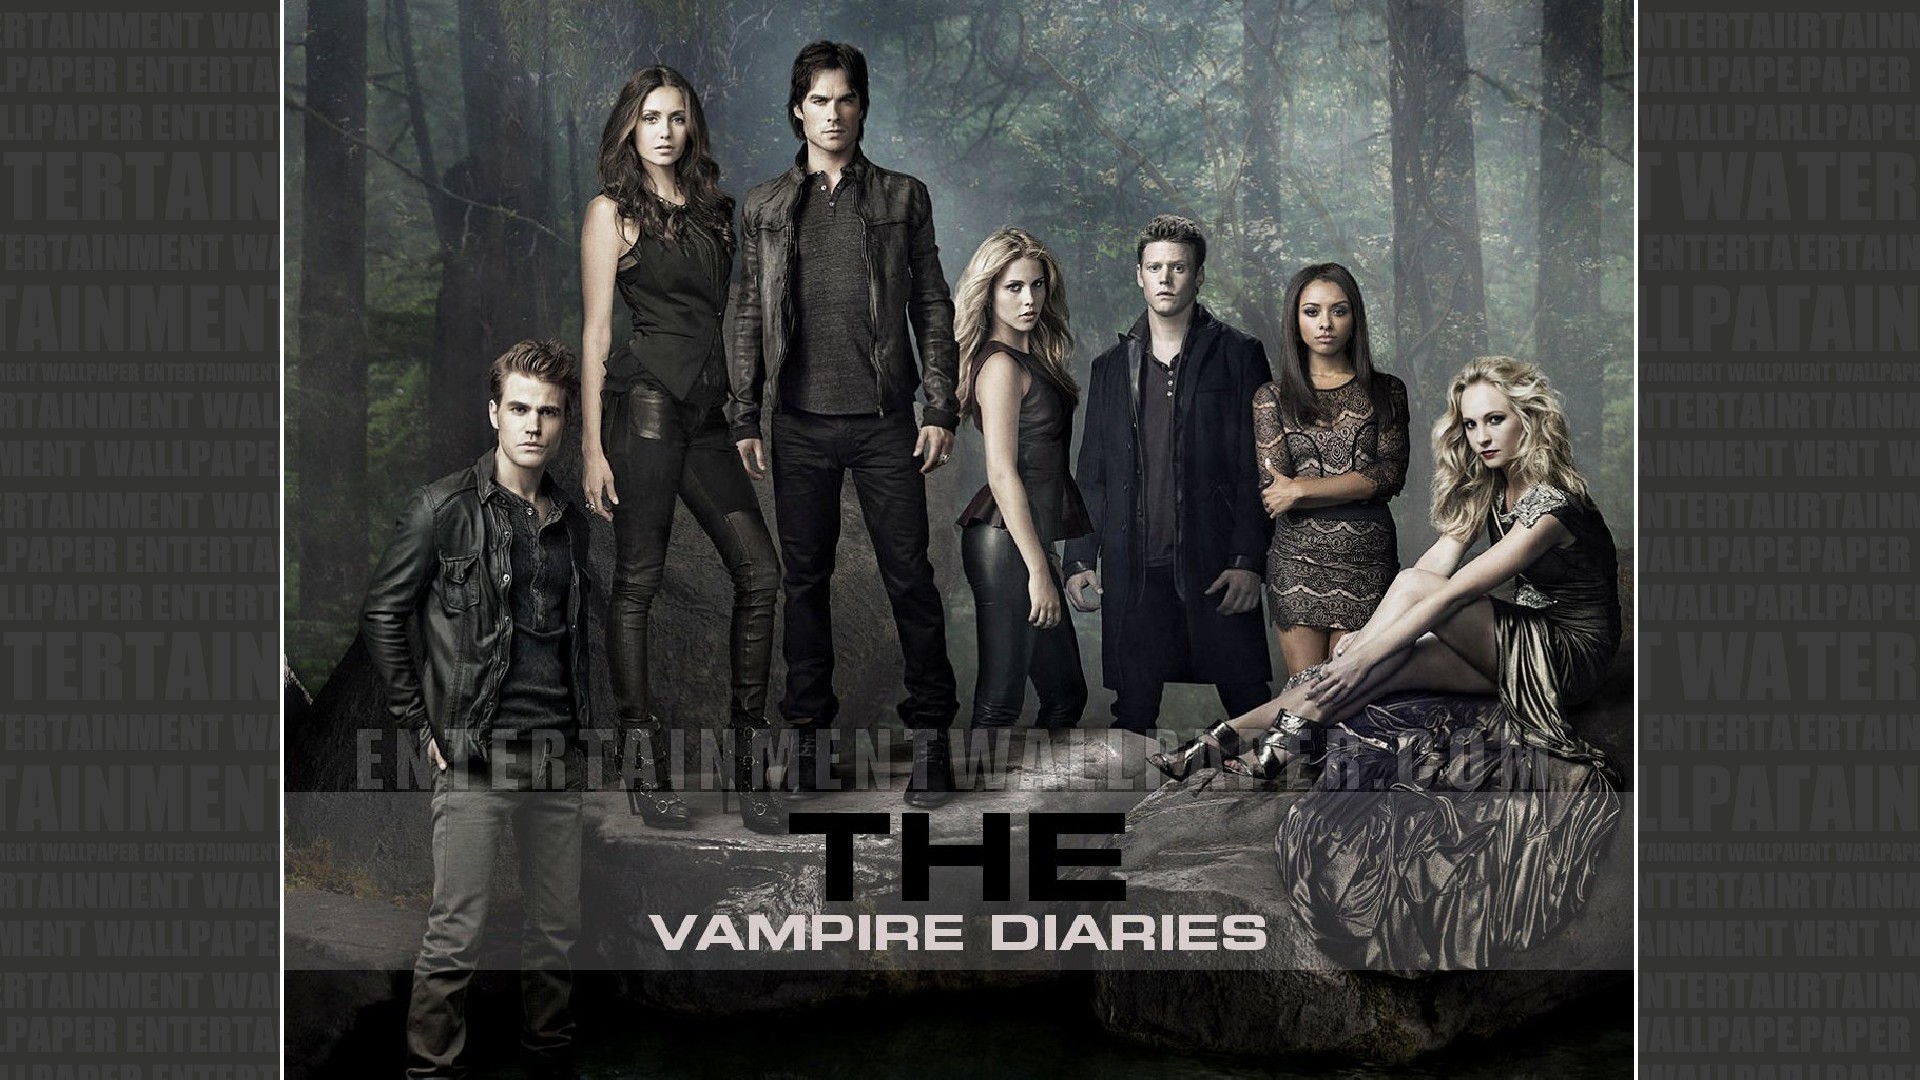 The Vampire Diaries Wallpaper Original Size Download Now 1920x1080